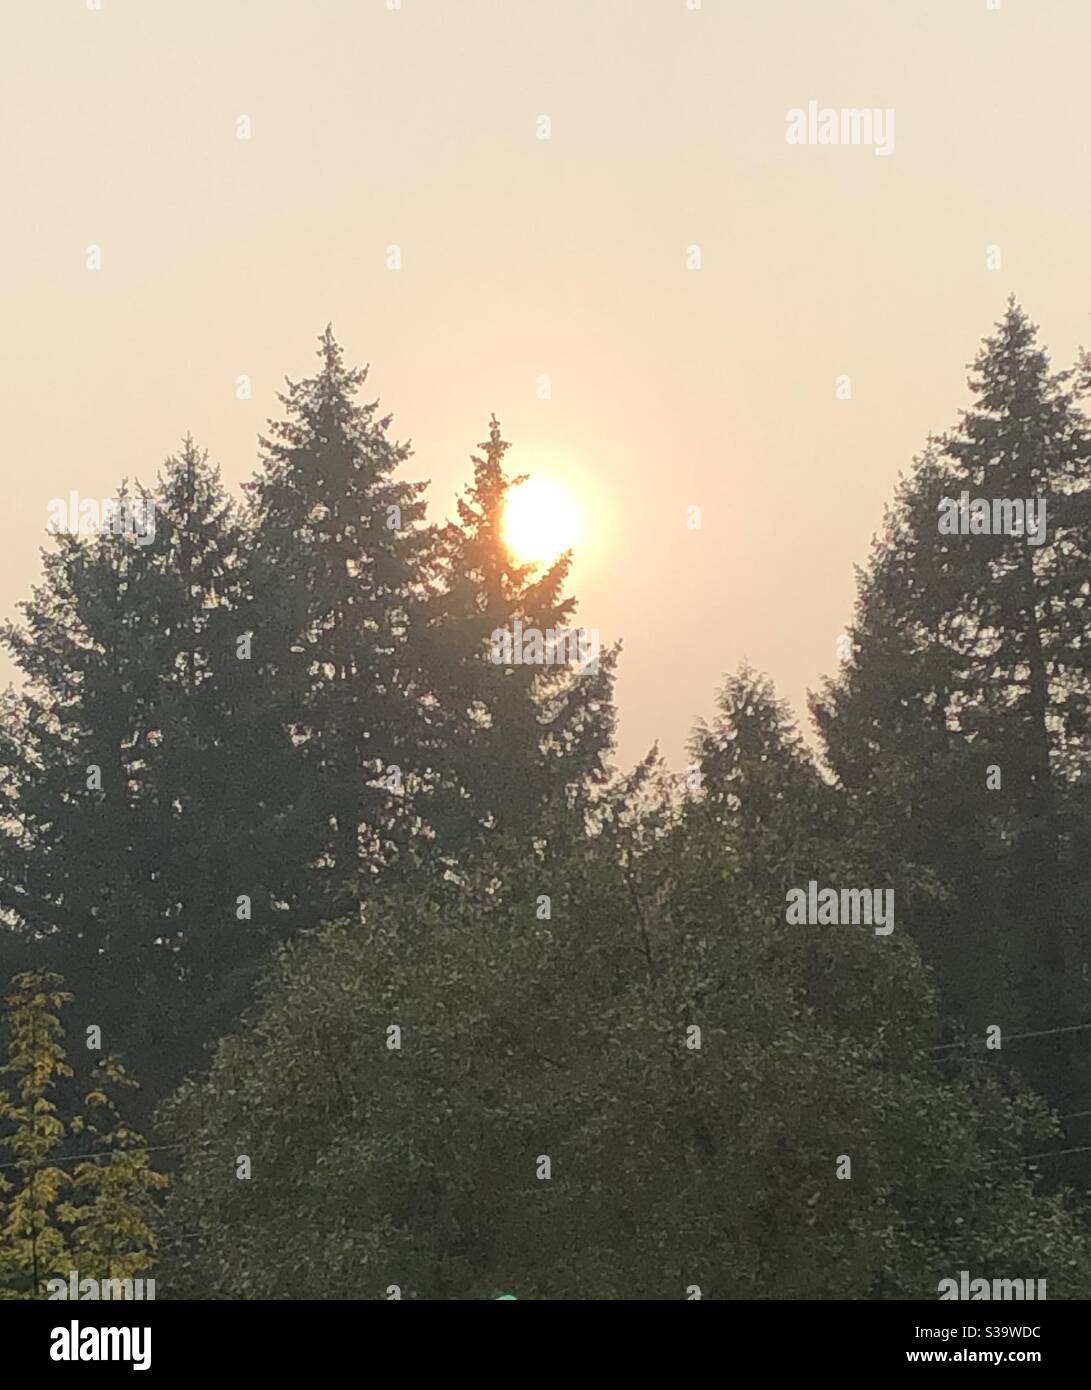 Washington State covered in wildfire smoke blocking the sun - September 2020 Stock Photo